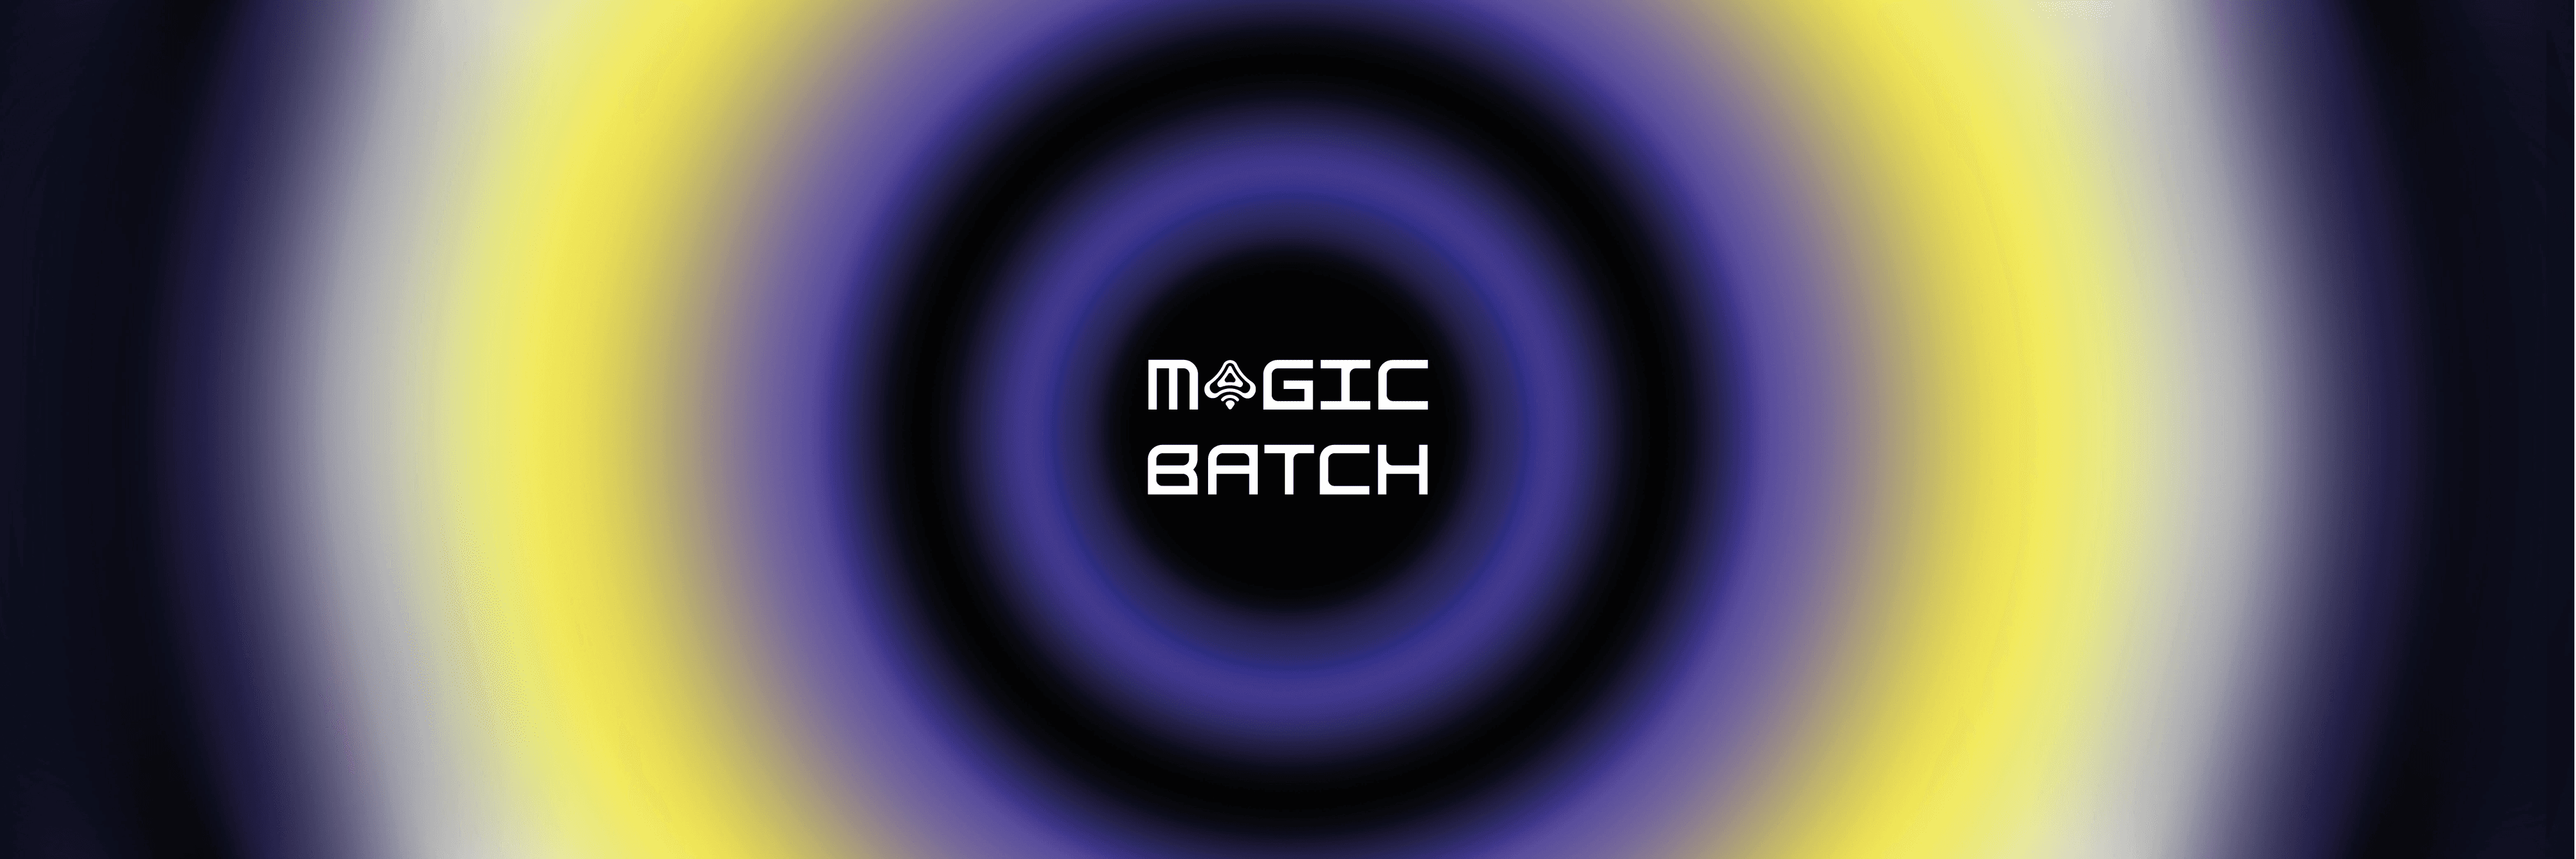 MagicBatch banner